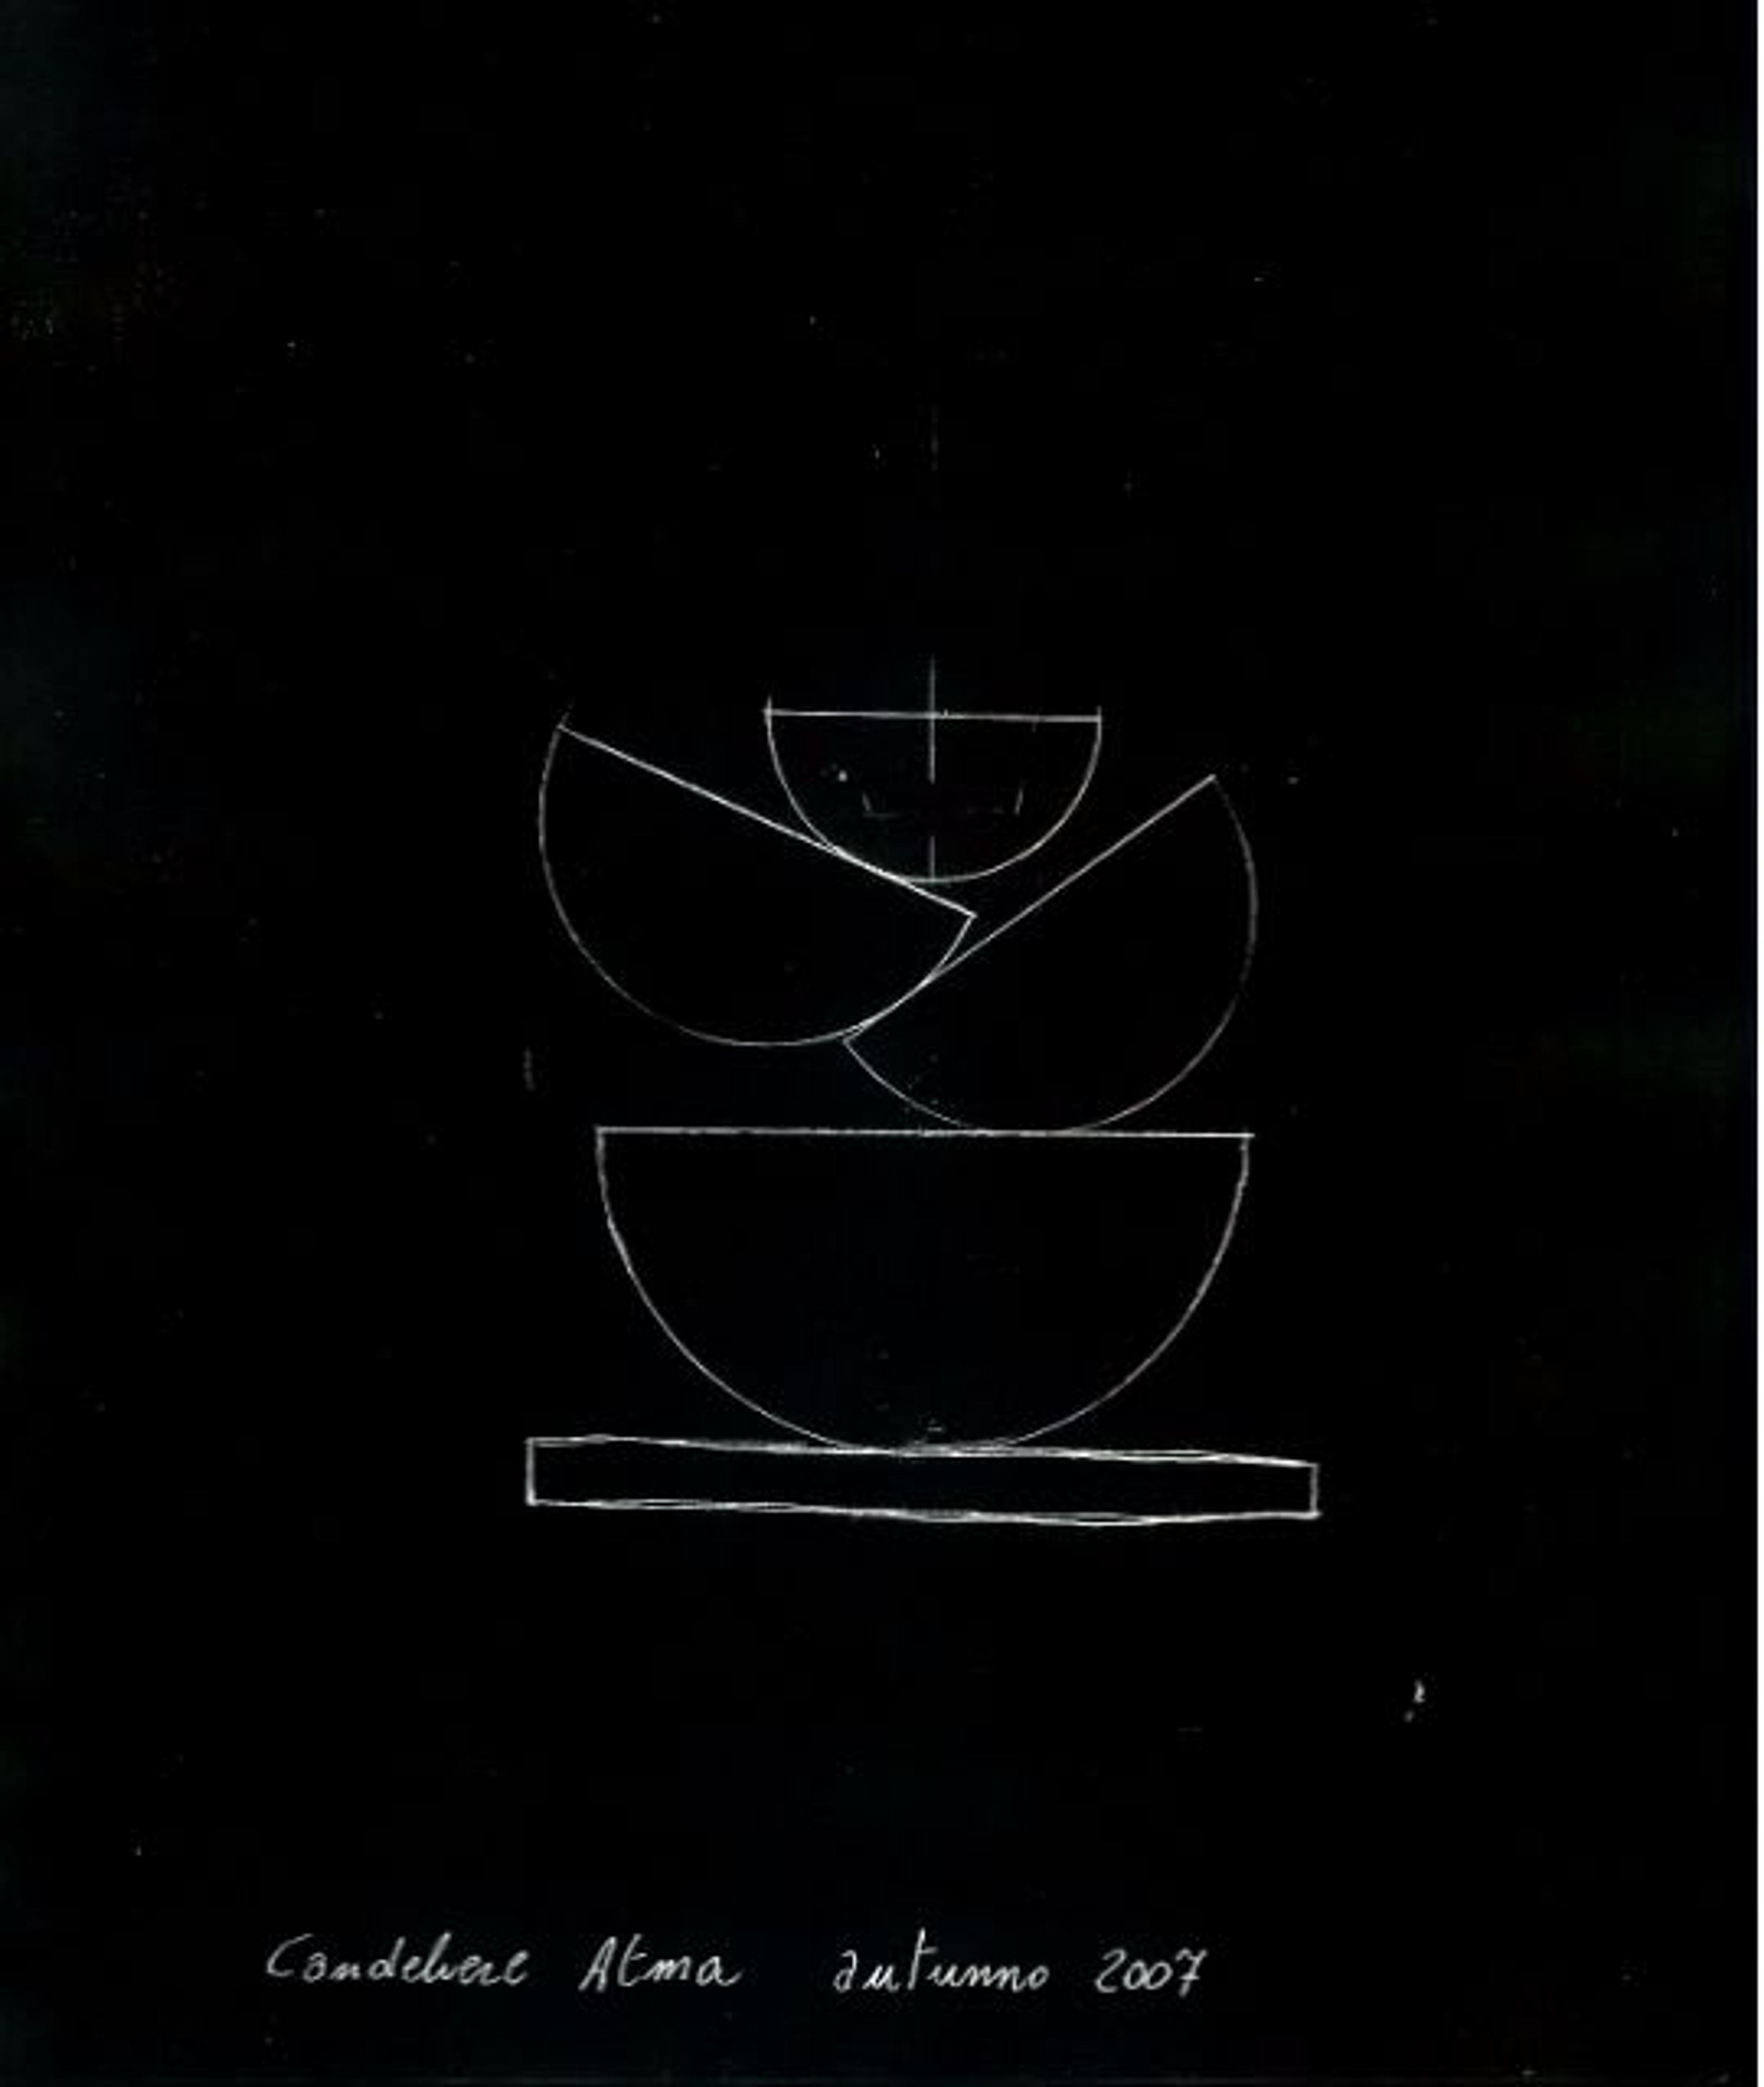 Sketch of Atma Candlestick by Enrico Zanetto